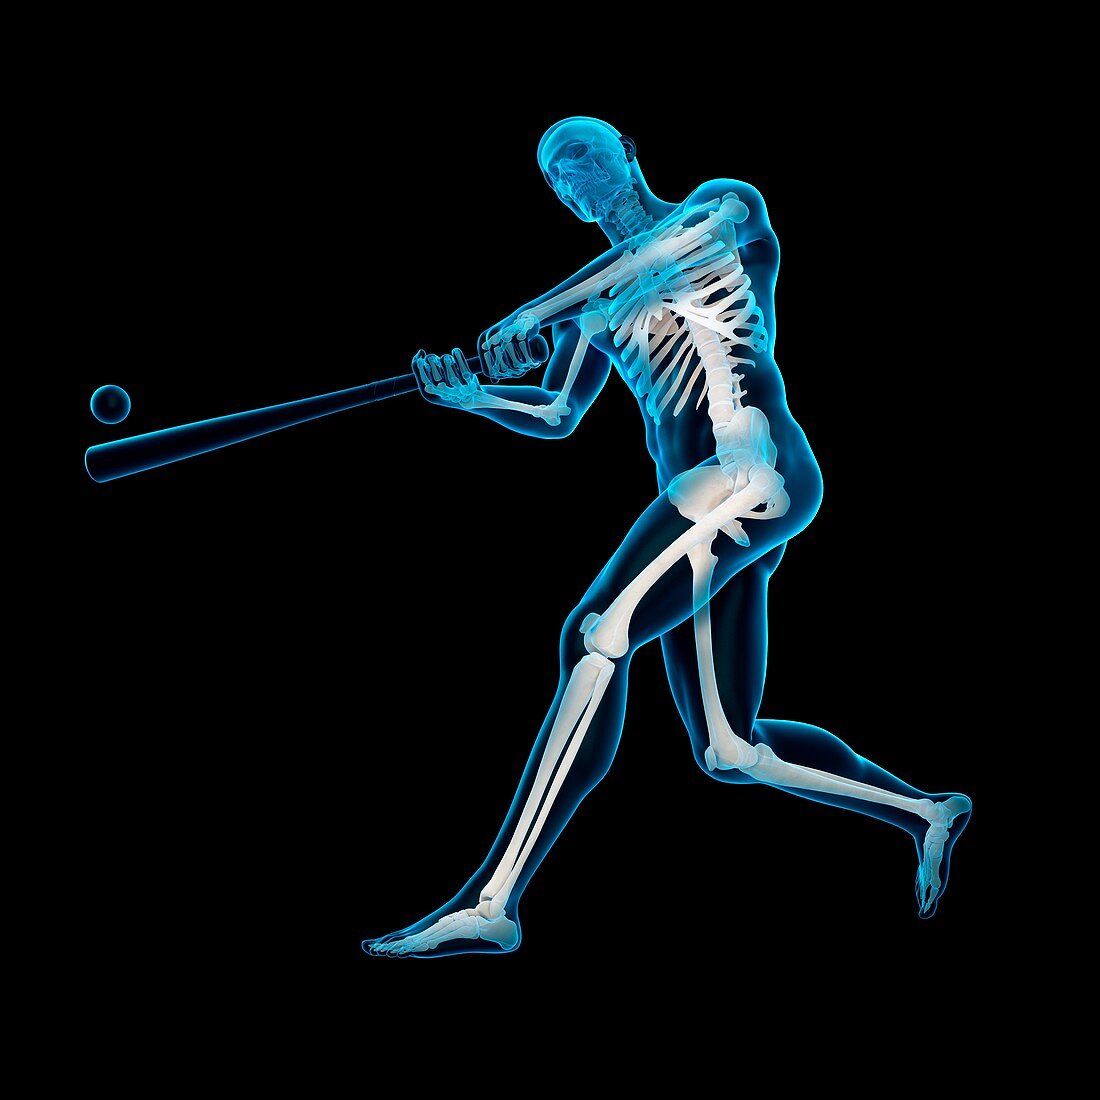 Baseball player, illustration